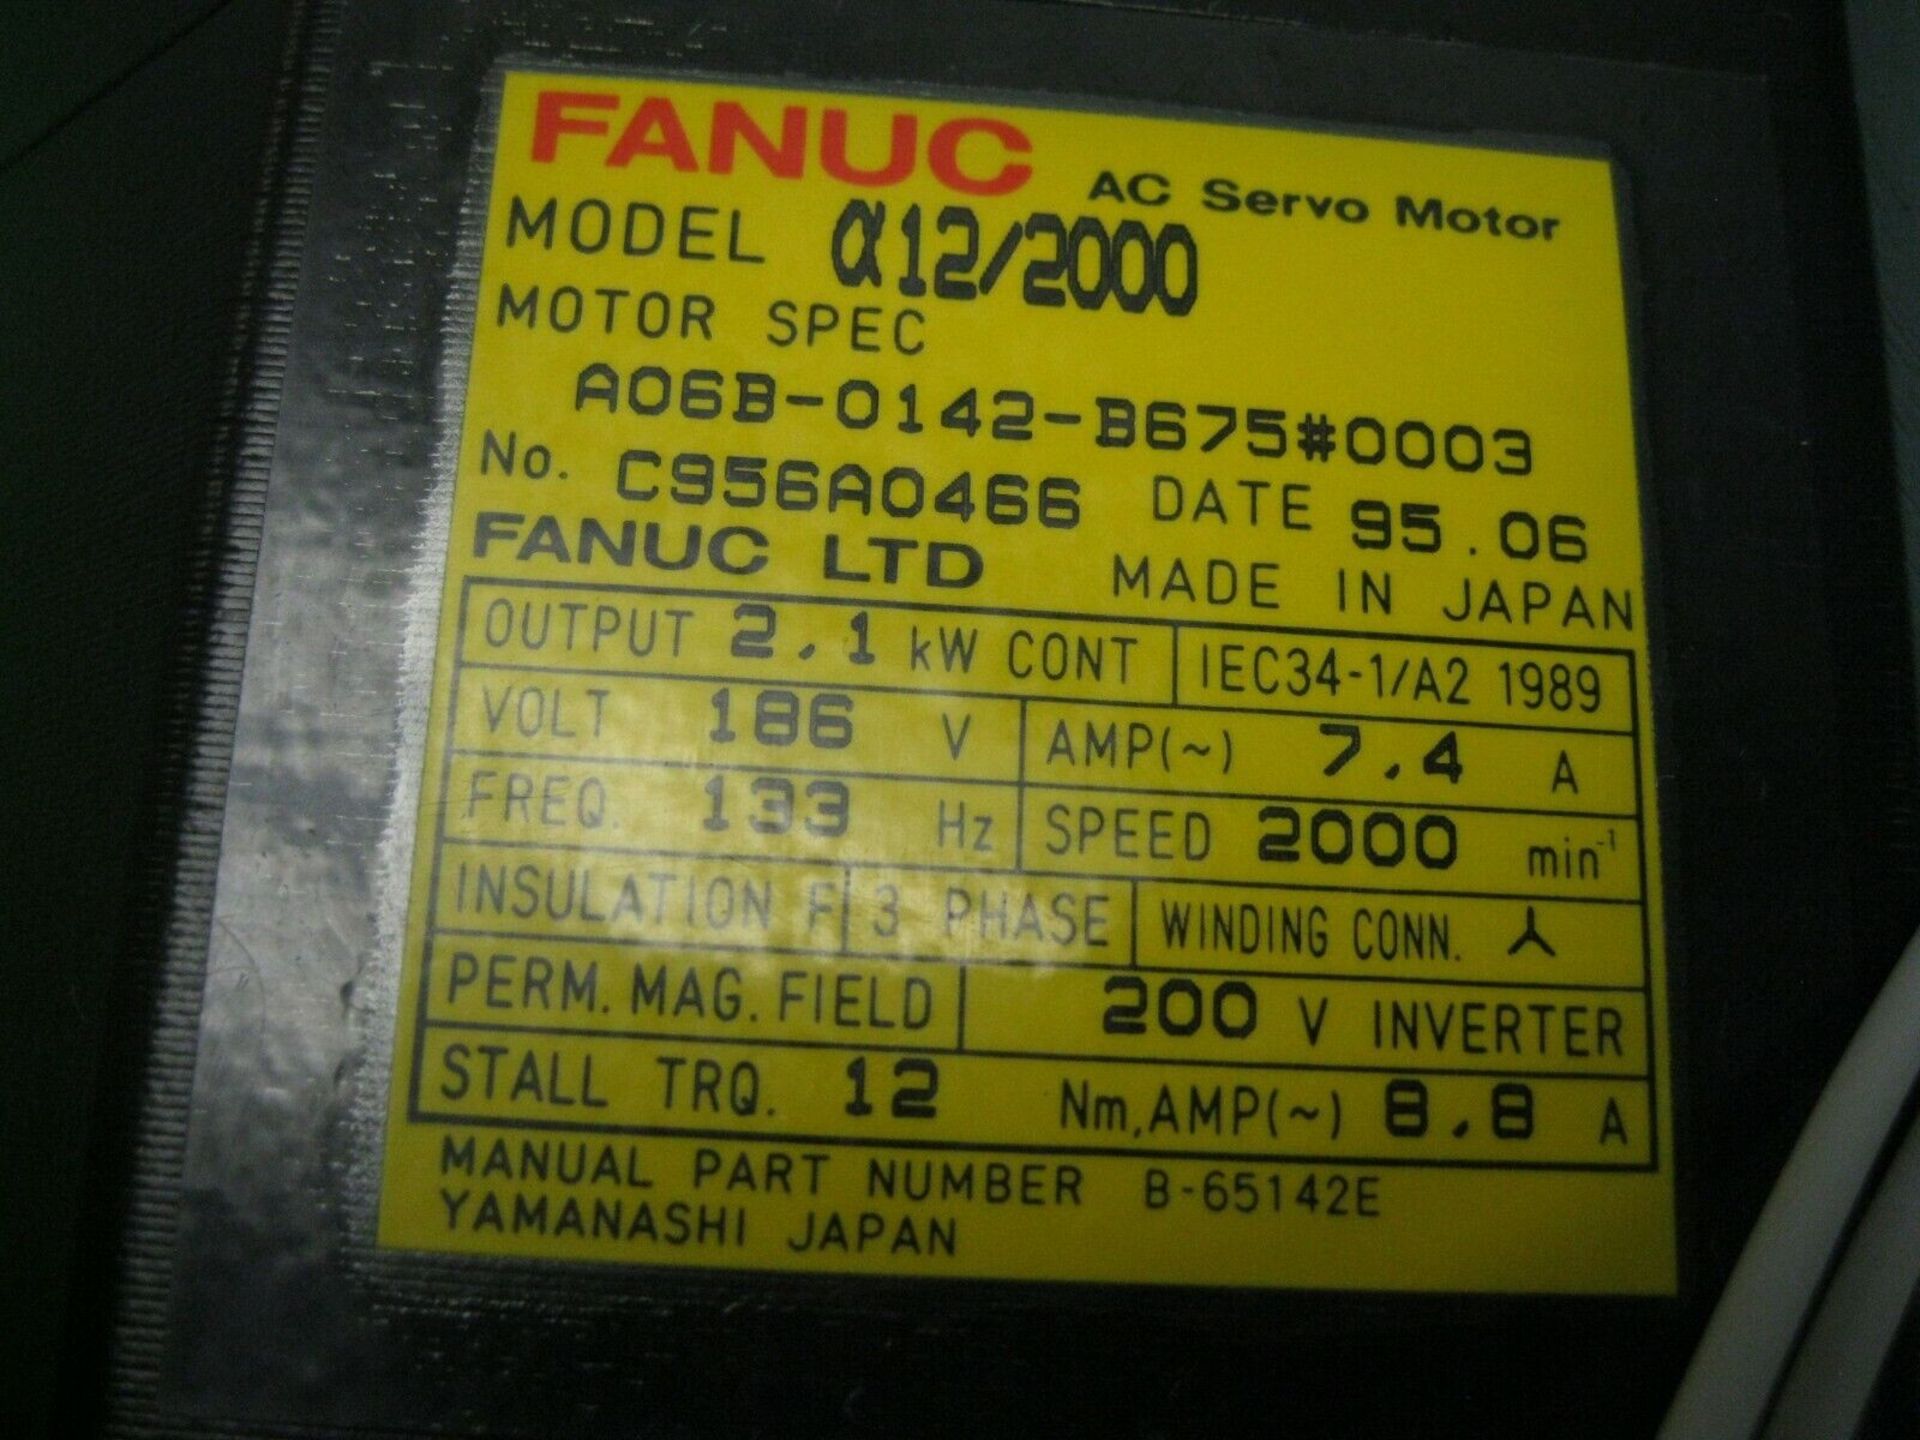 Lot of (4) Fanuc a12/2000 (A06B-0142-B675) 2.1 kW AC Servo Motor (Located Springfield, NH) ( - Image 4 of 5